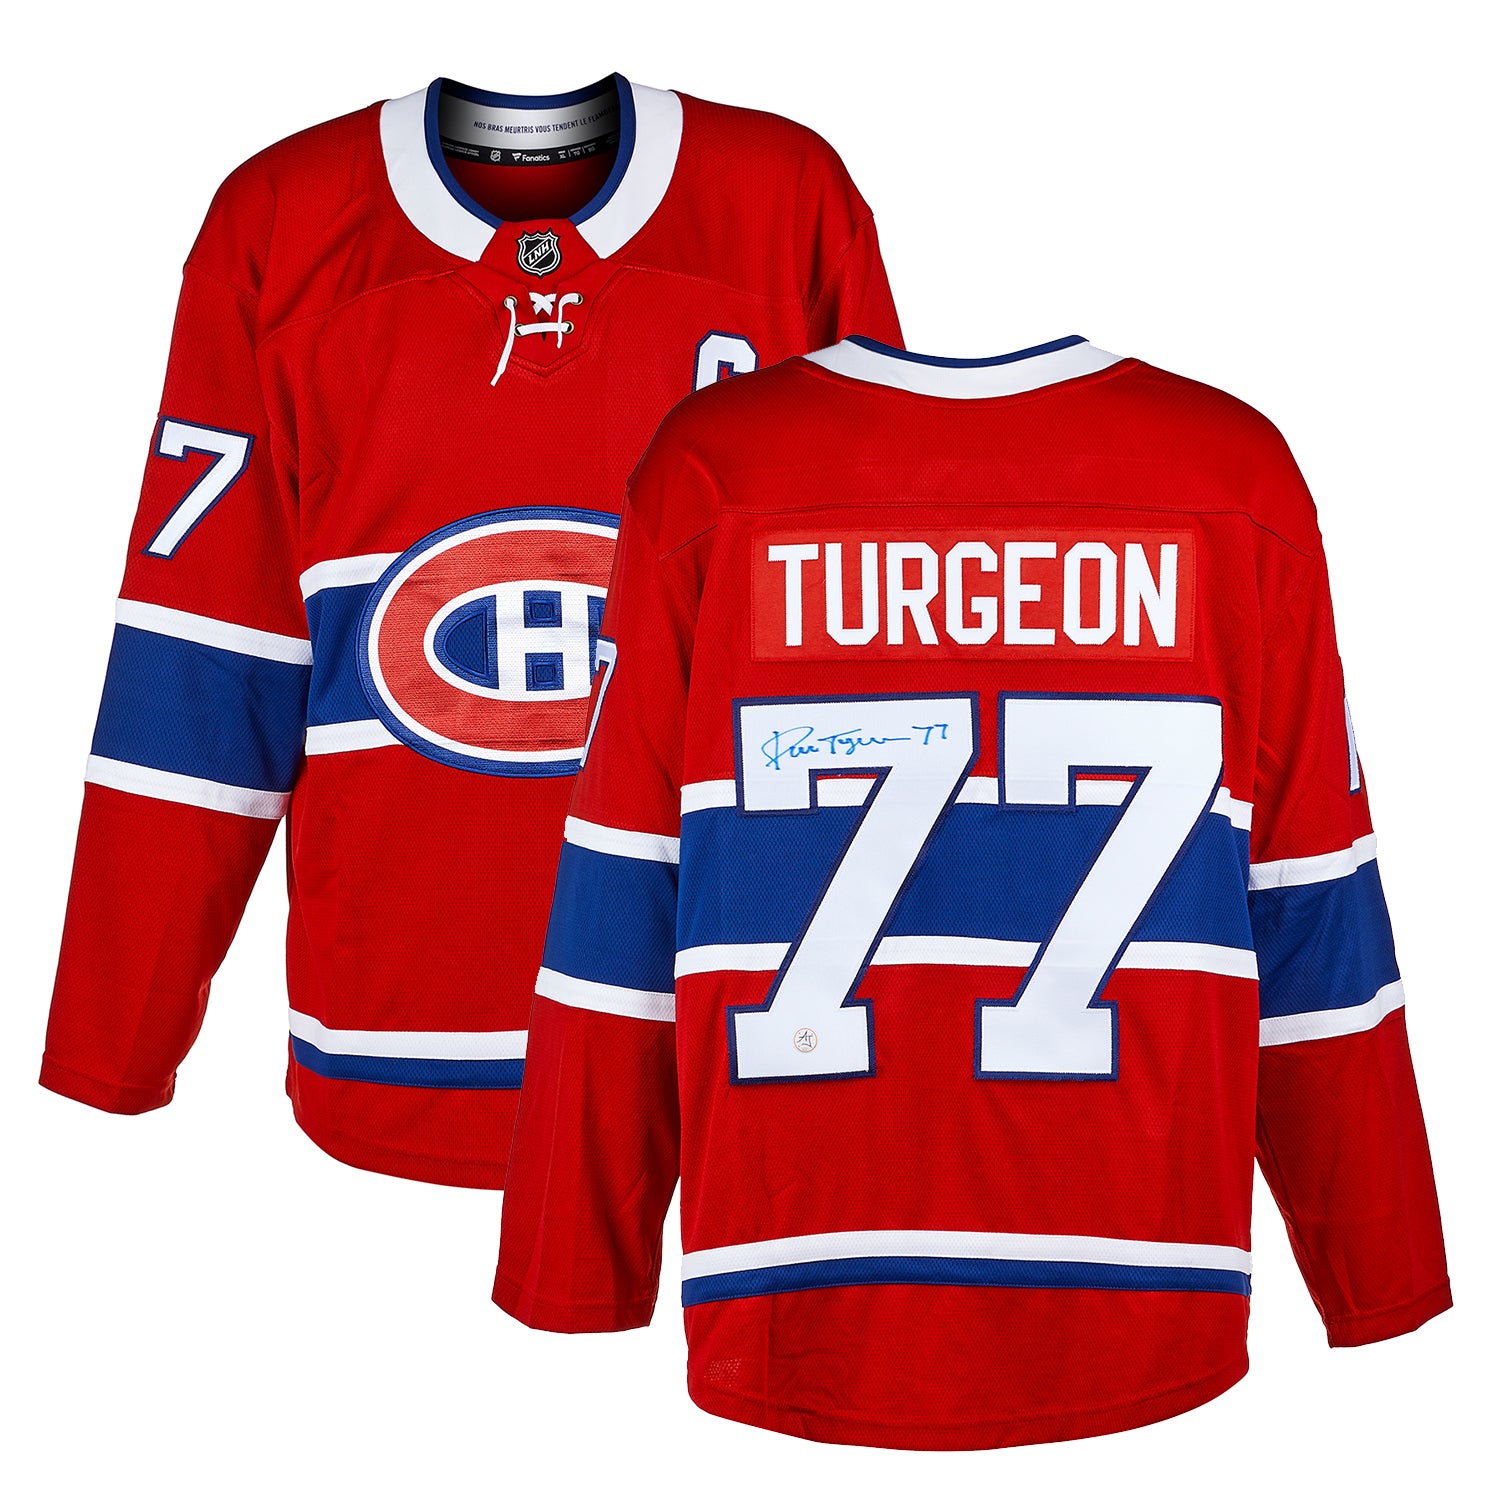 Pierre Turgeon Autographed Montreal Canadiens Fanatics Jersey